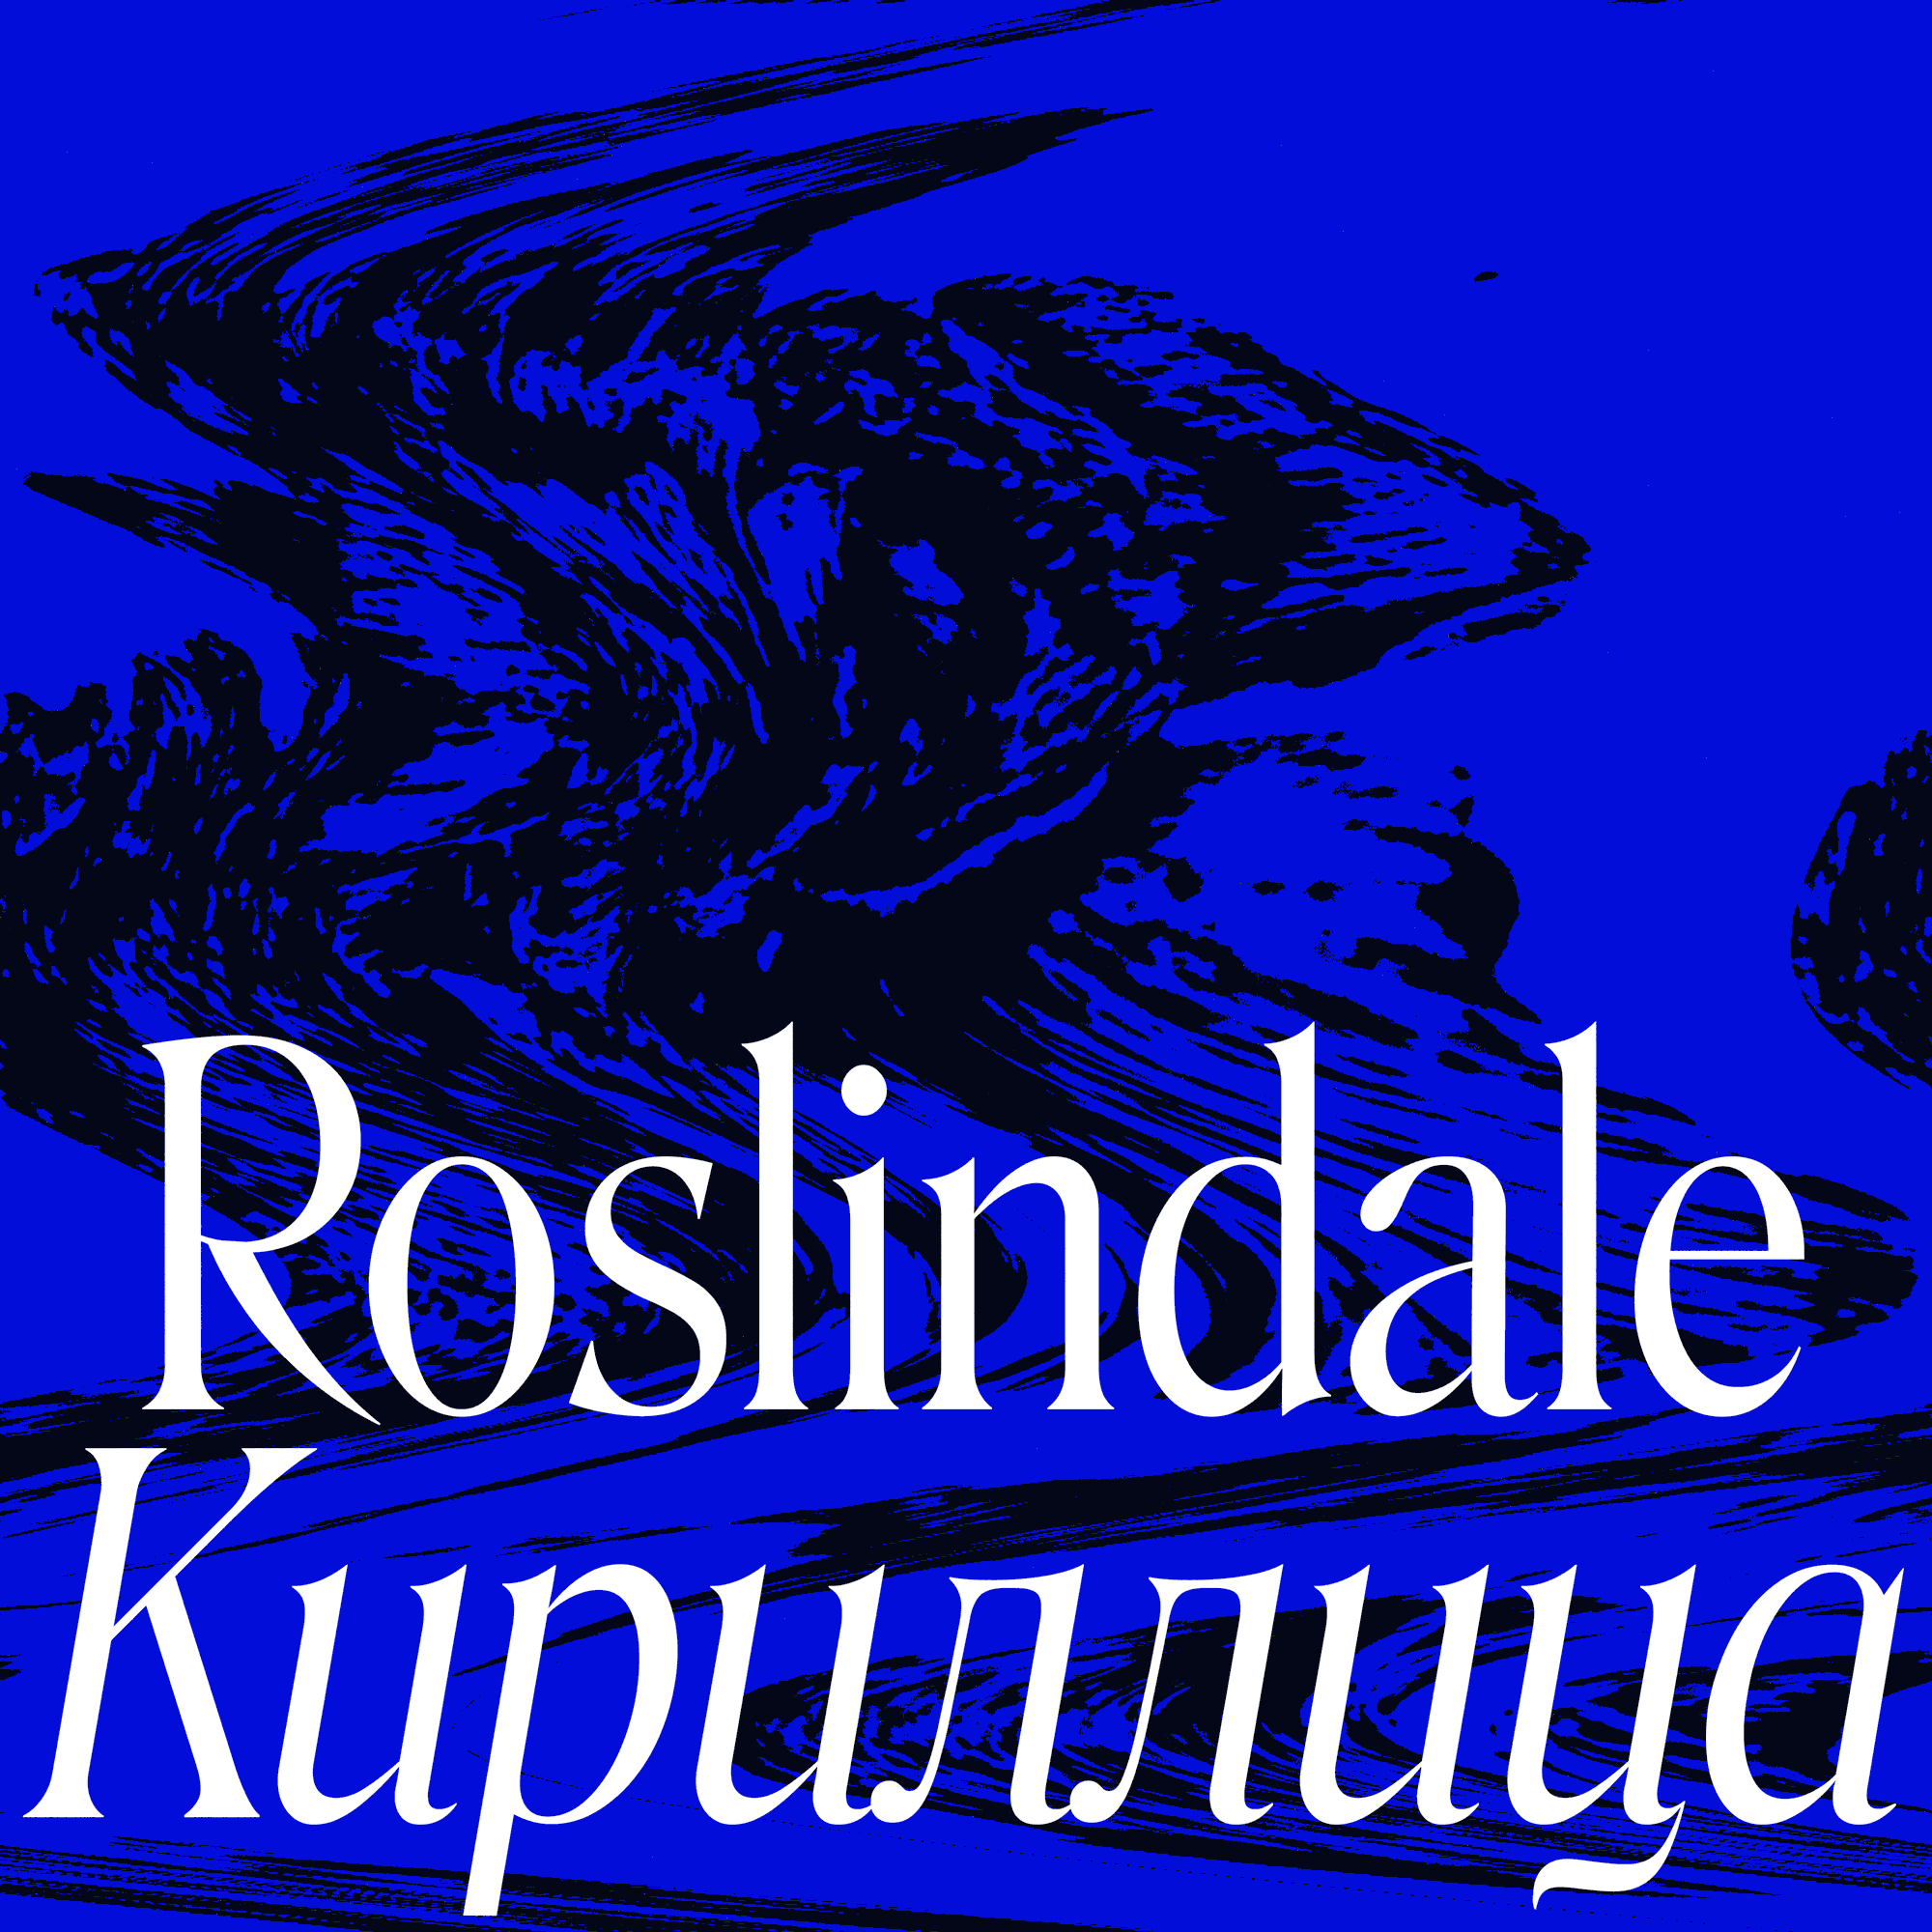 Roslindale cyrillic 1